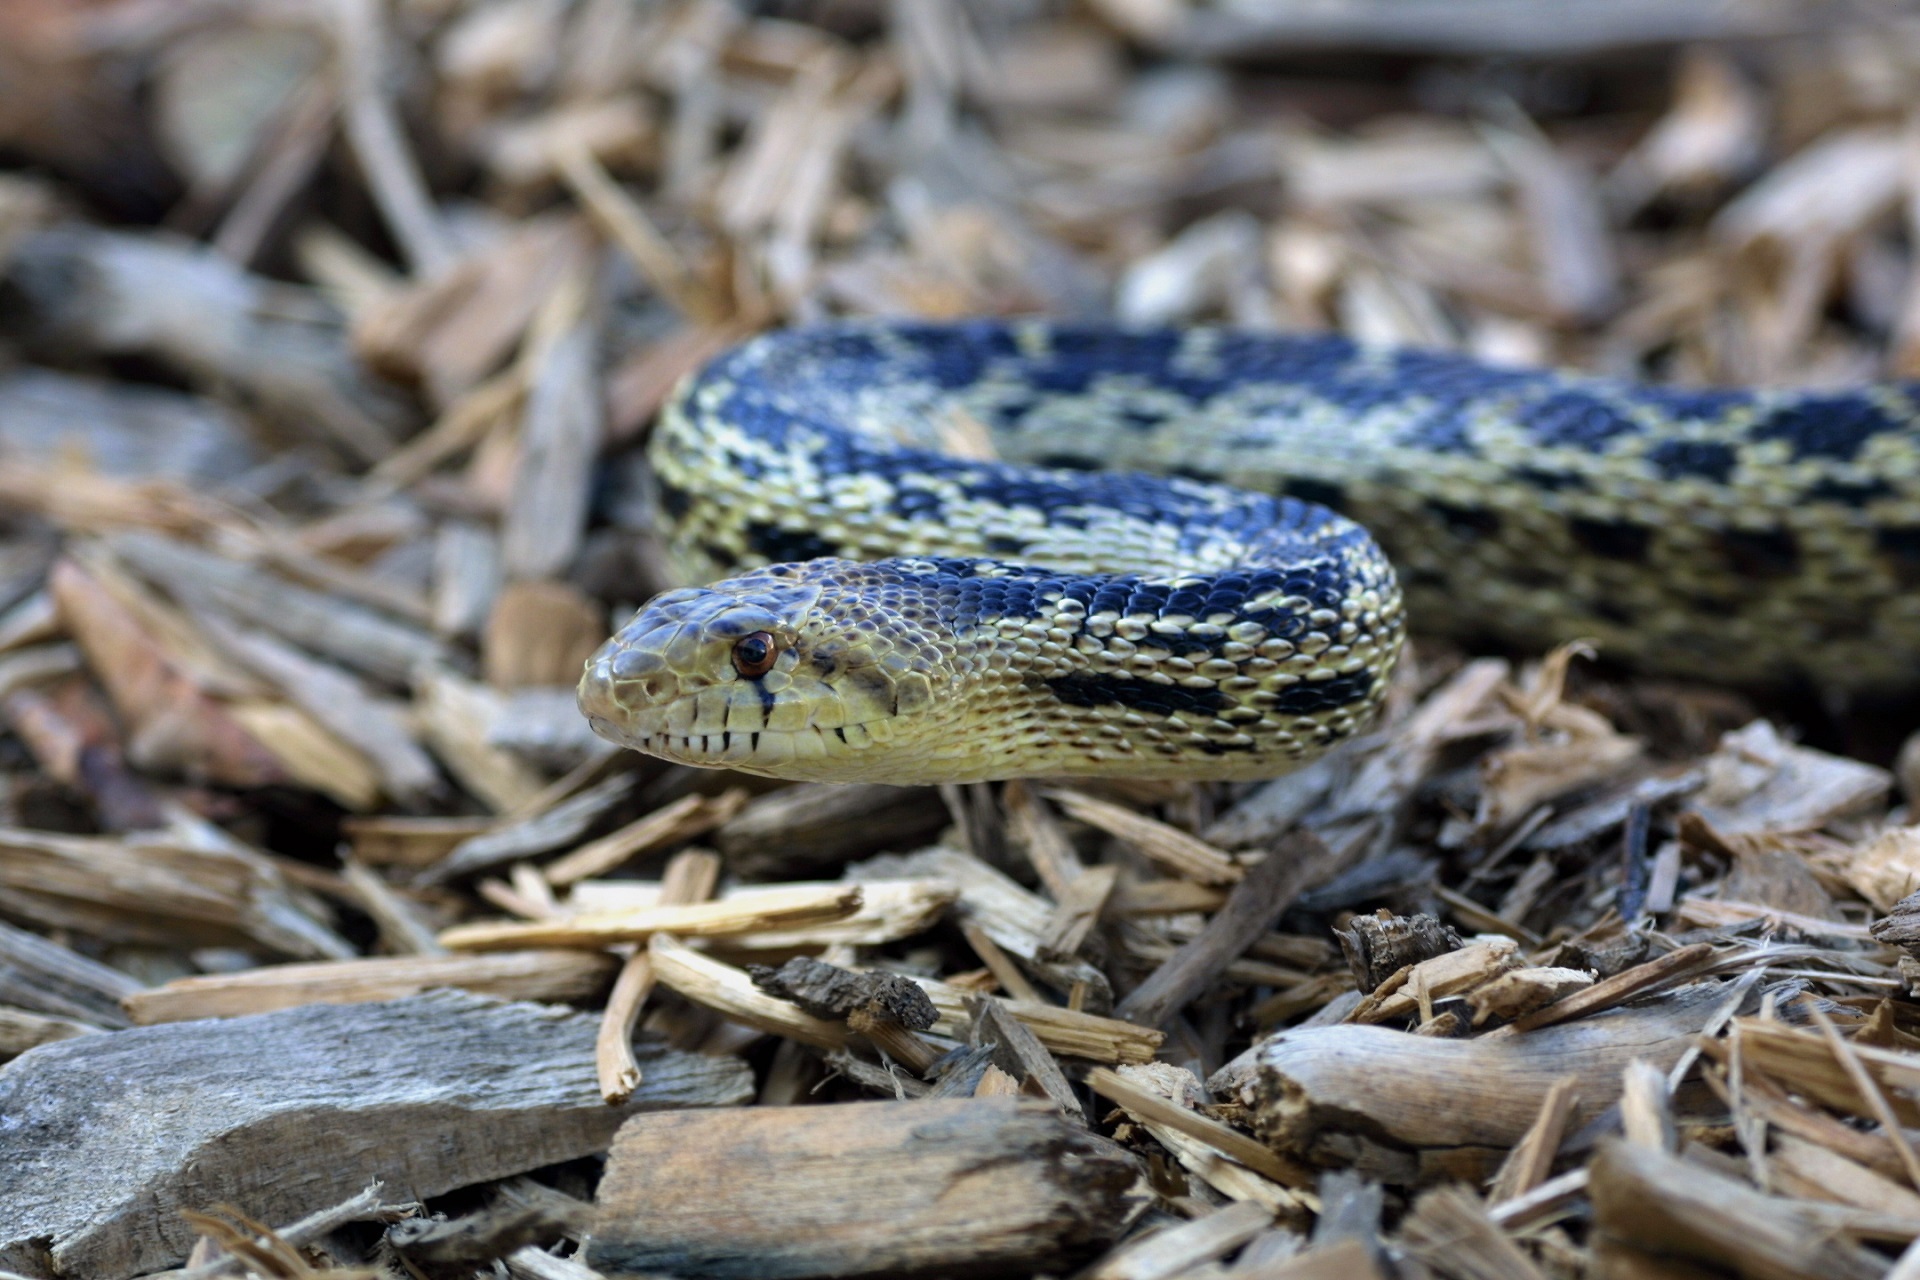 Gopher snake photo